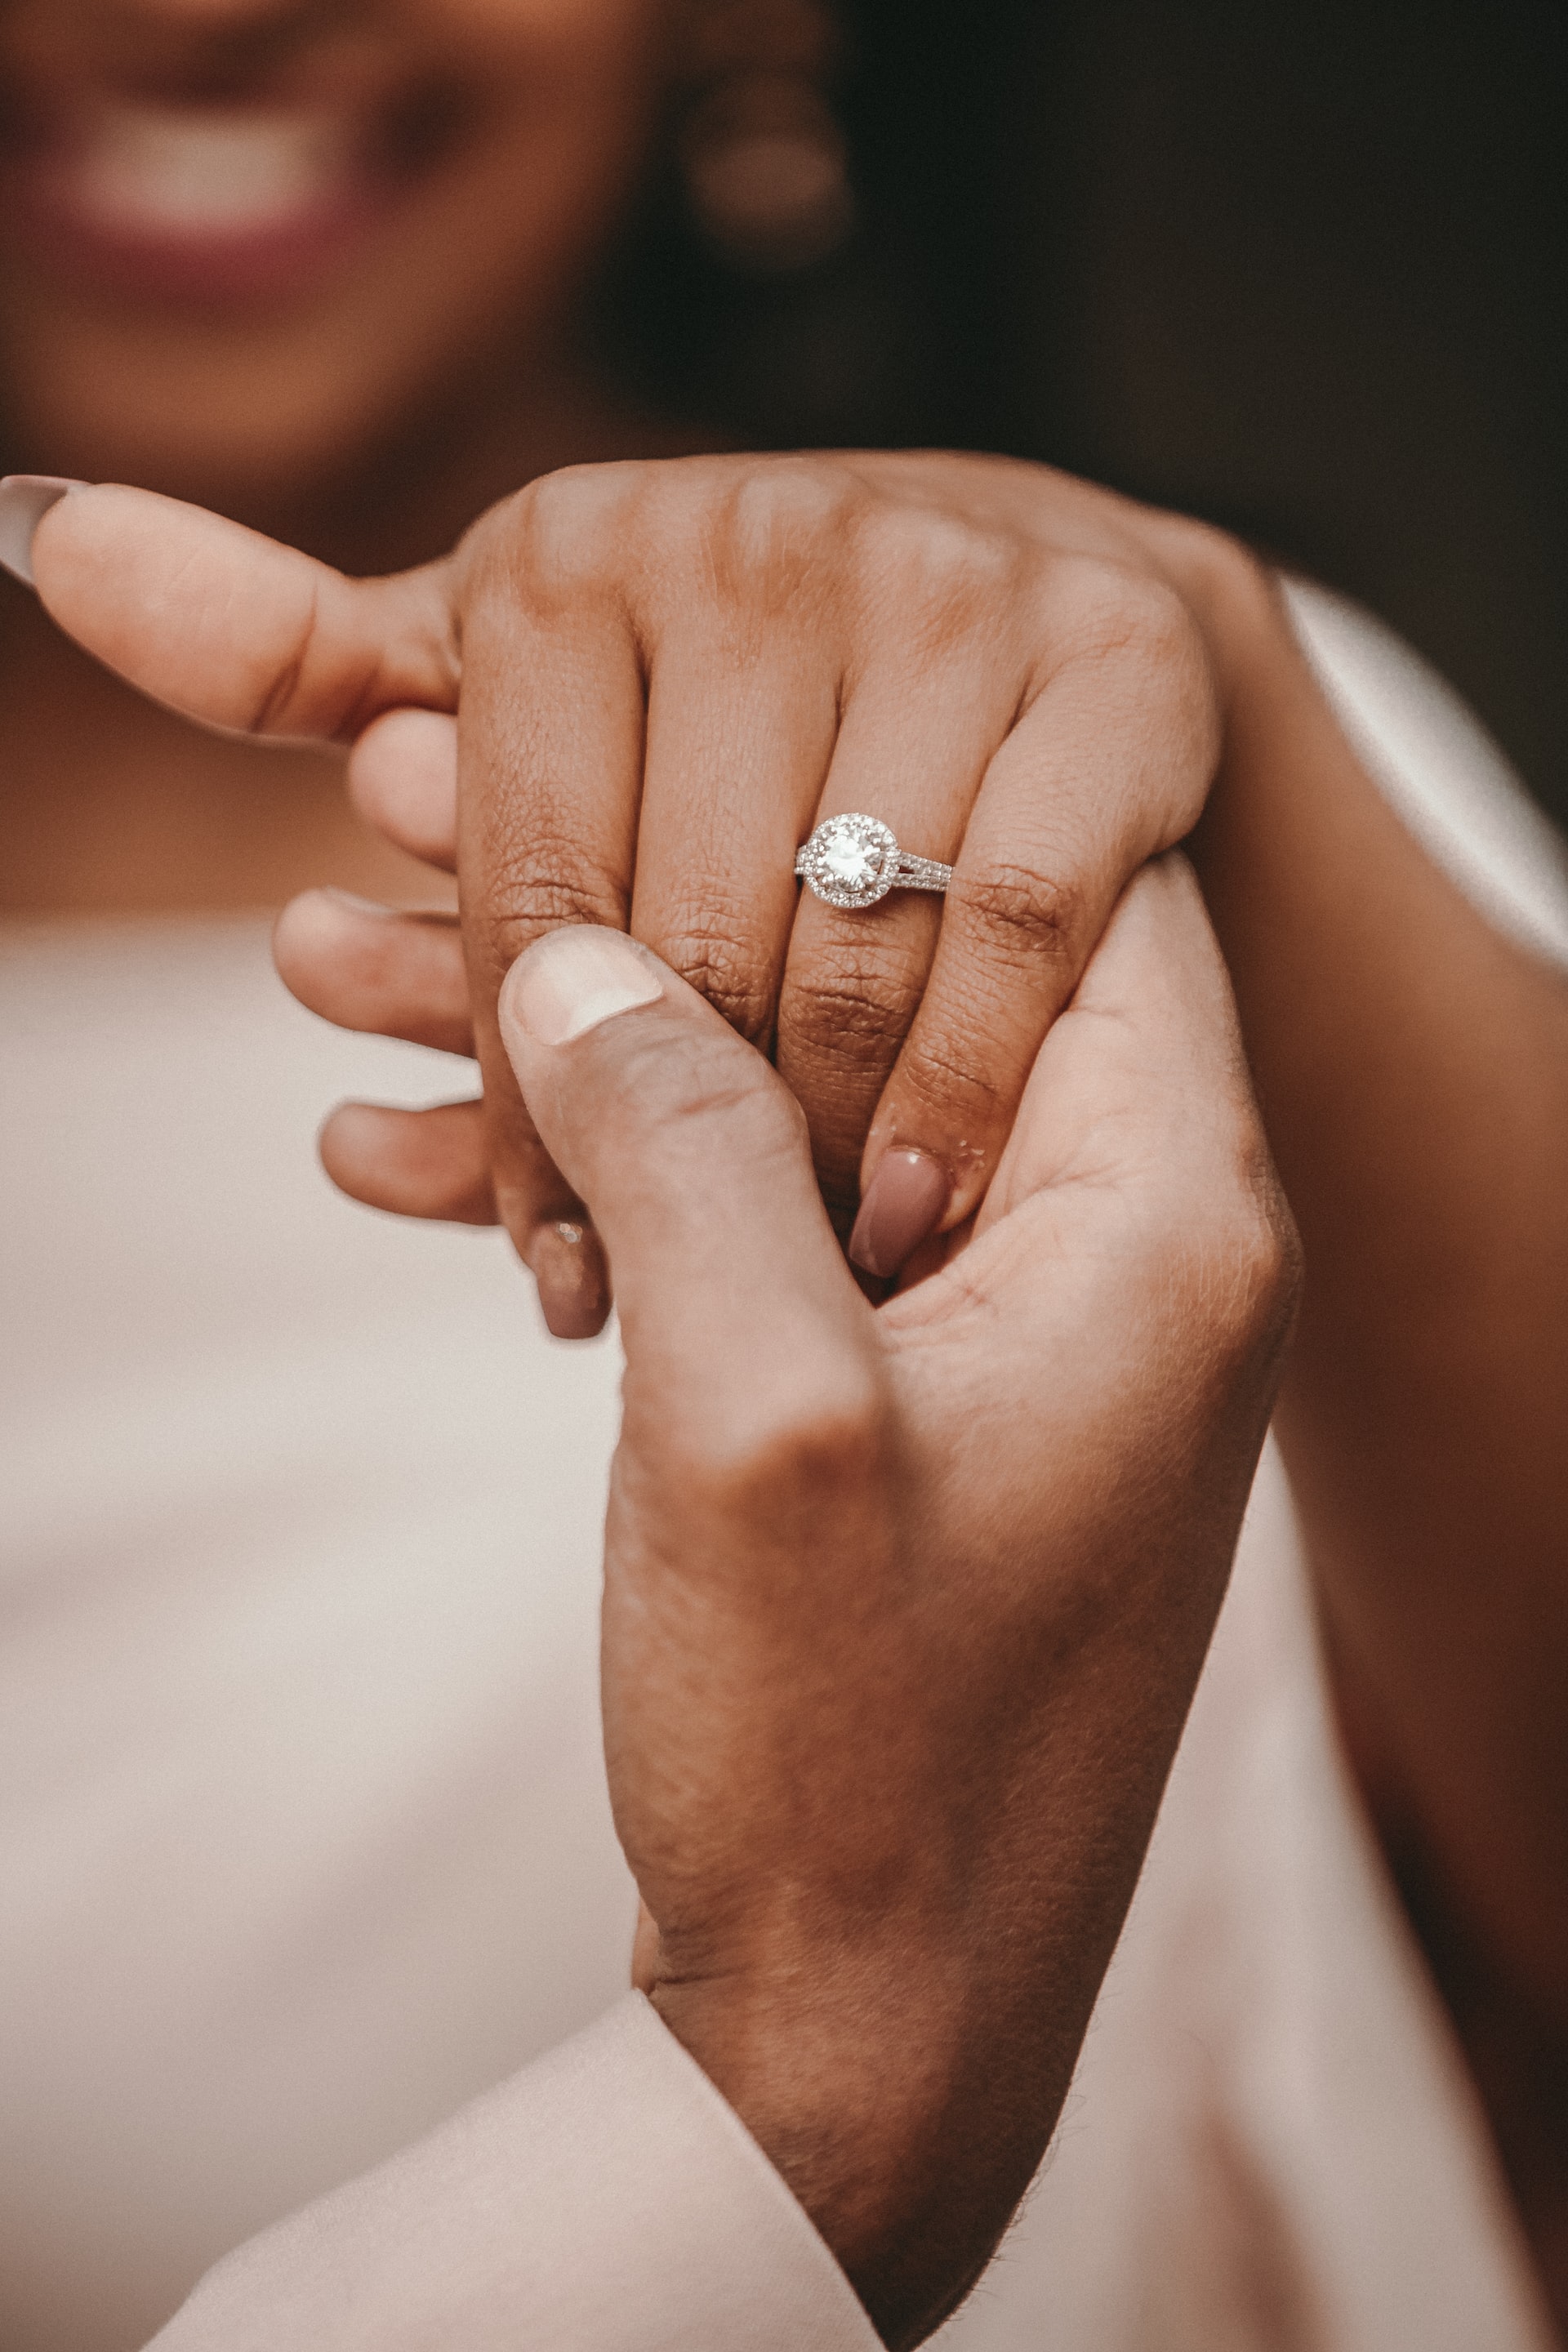 Woman showing a muslim wedding ring